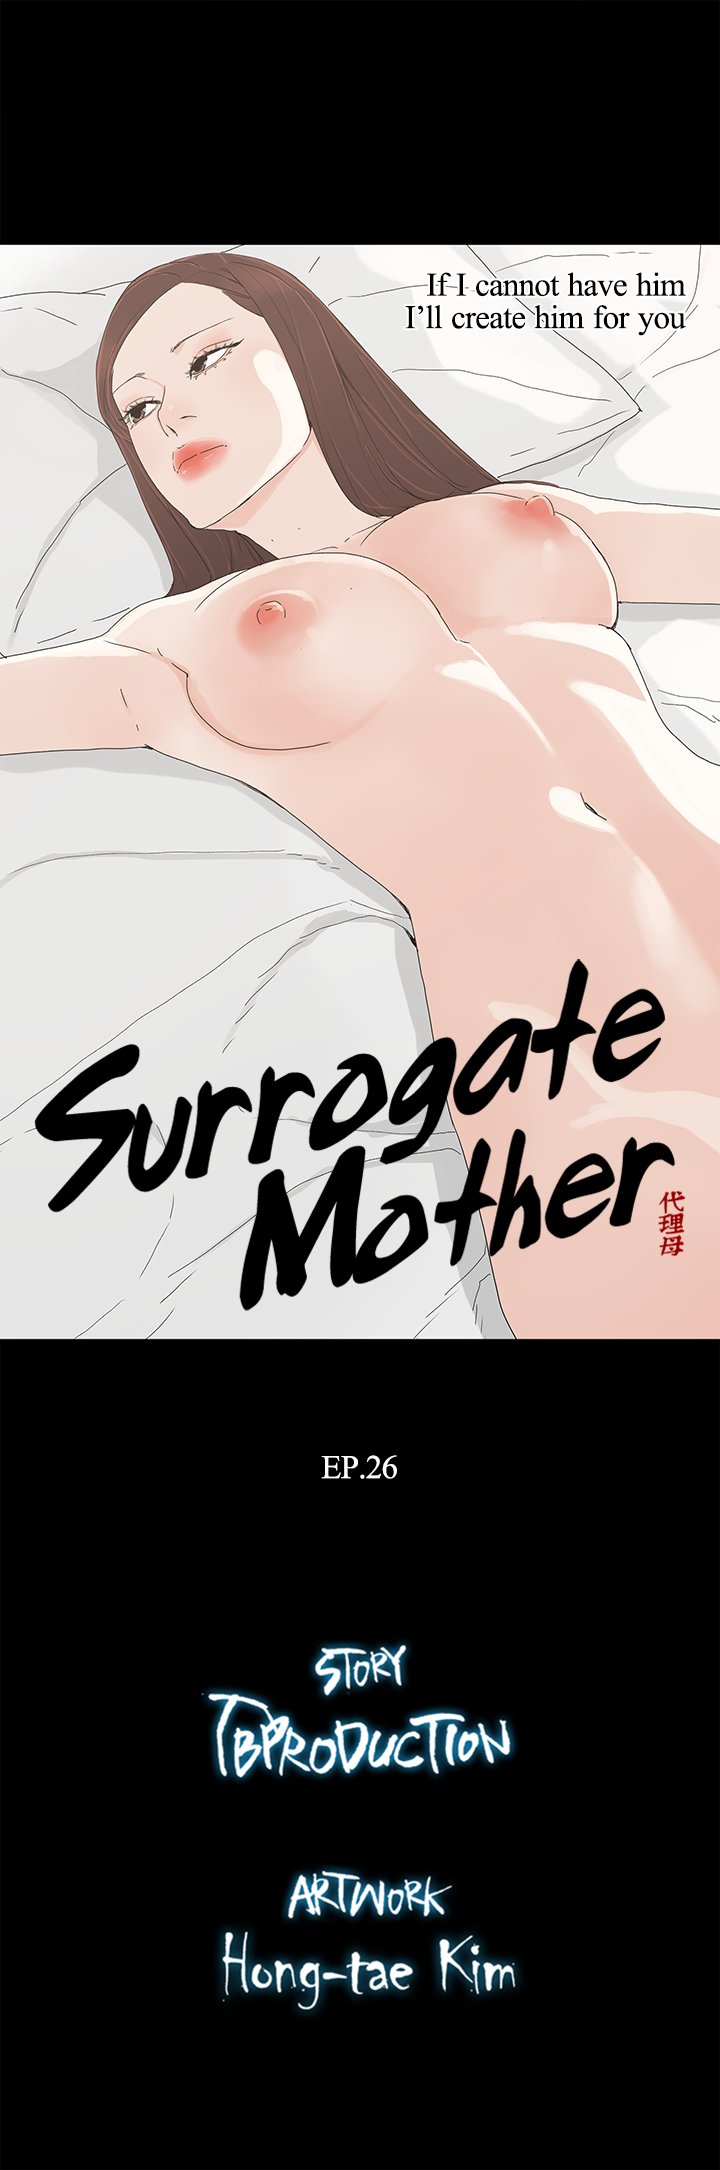 Surrogate Mother image